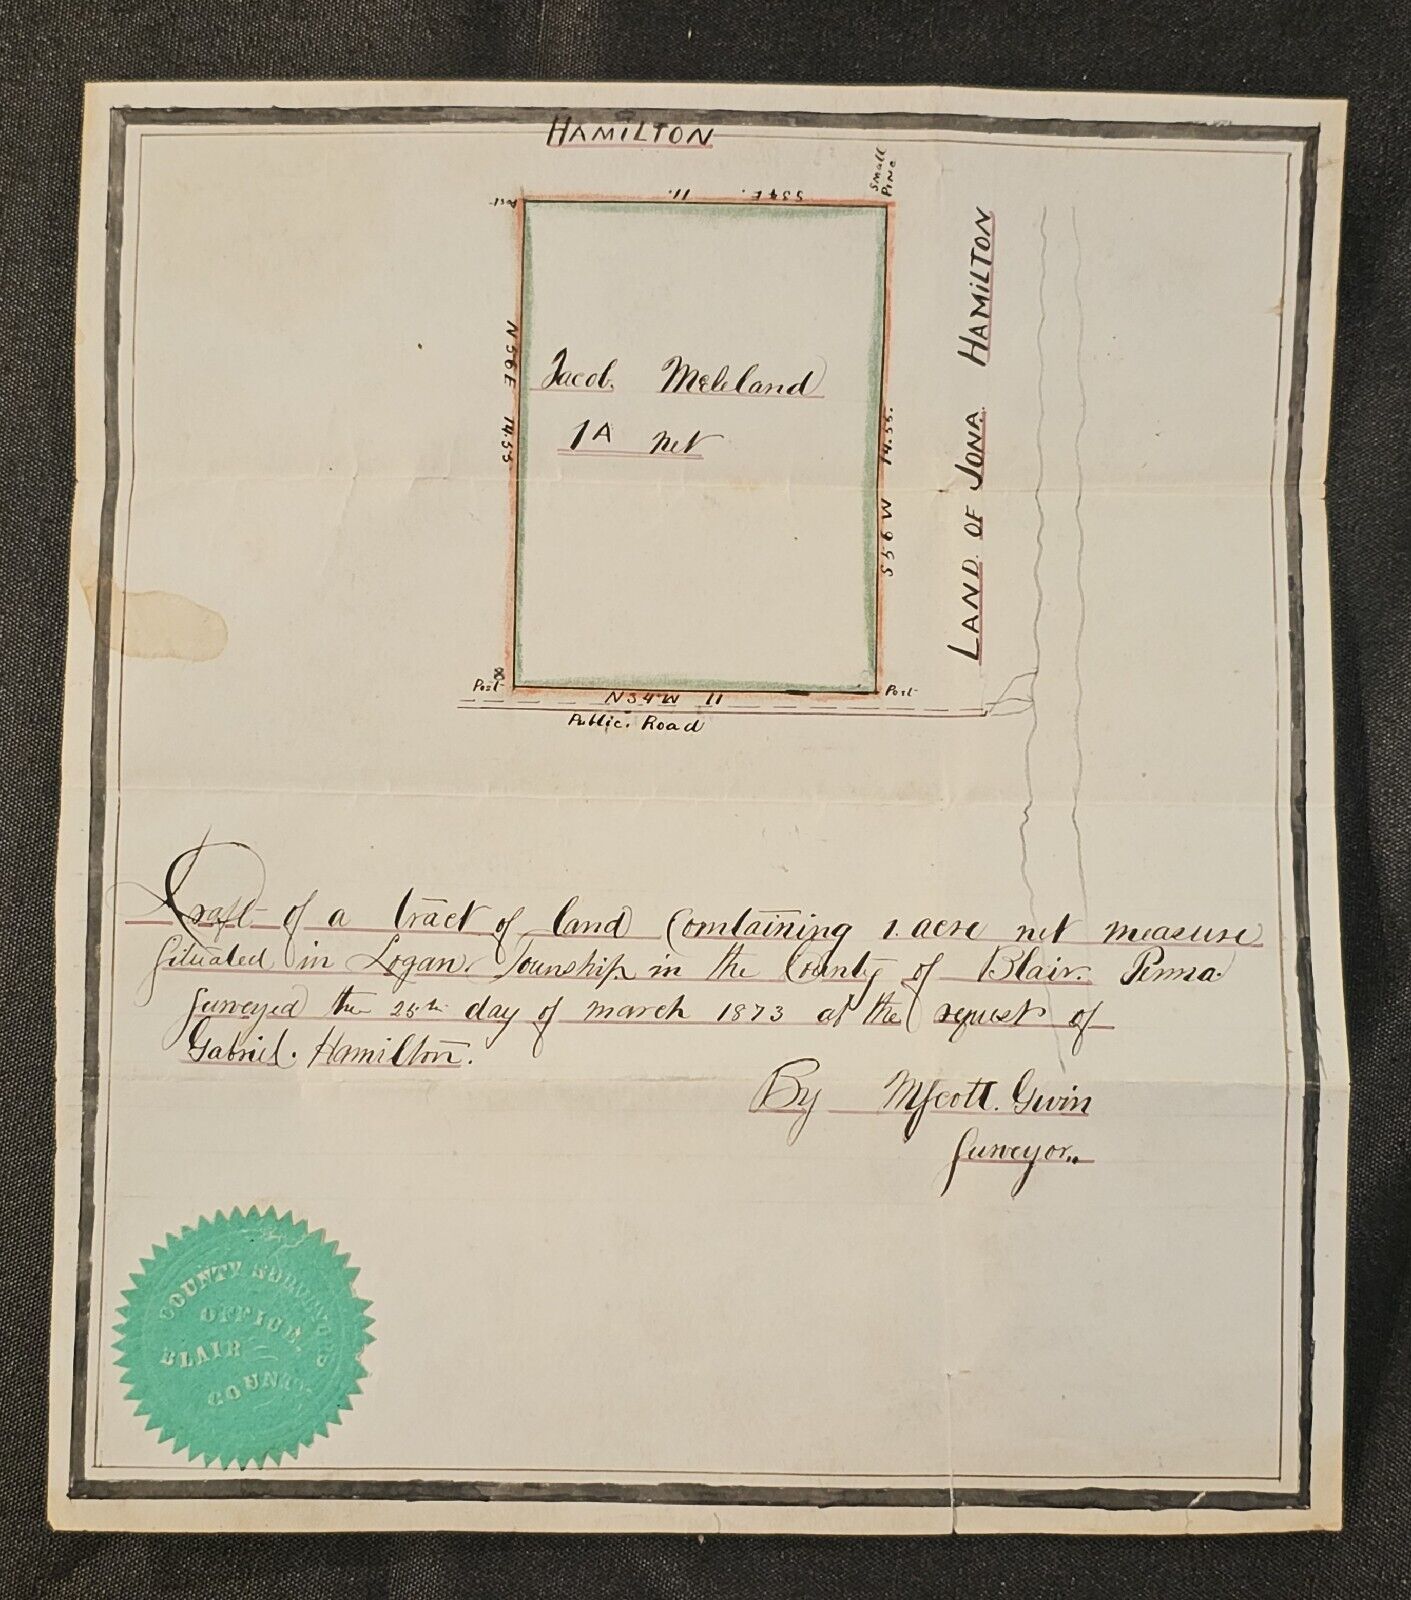 1873 Survey Land Draft Blair County, PA Jacob McLeland & Gabriel Hamilton